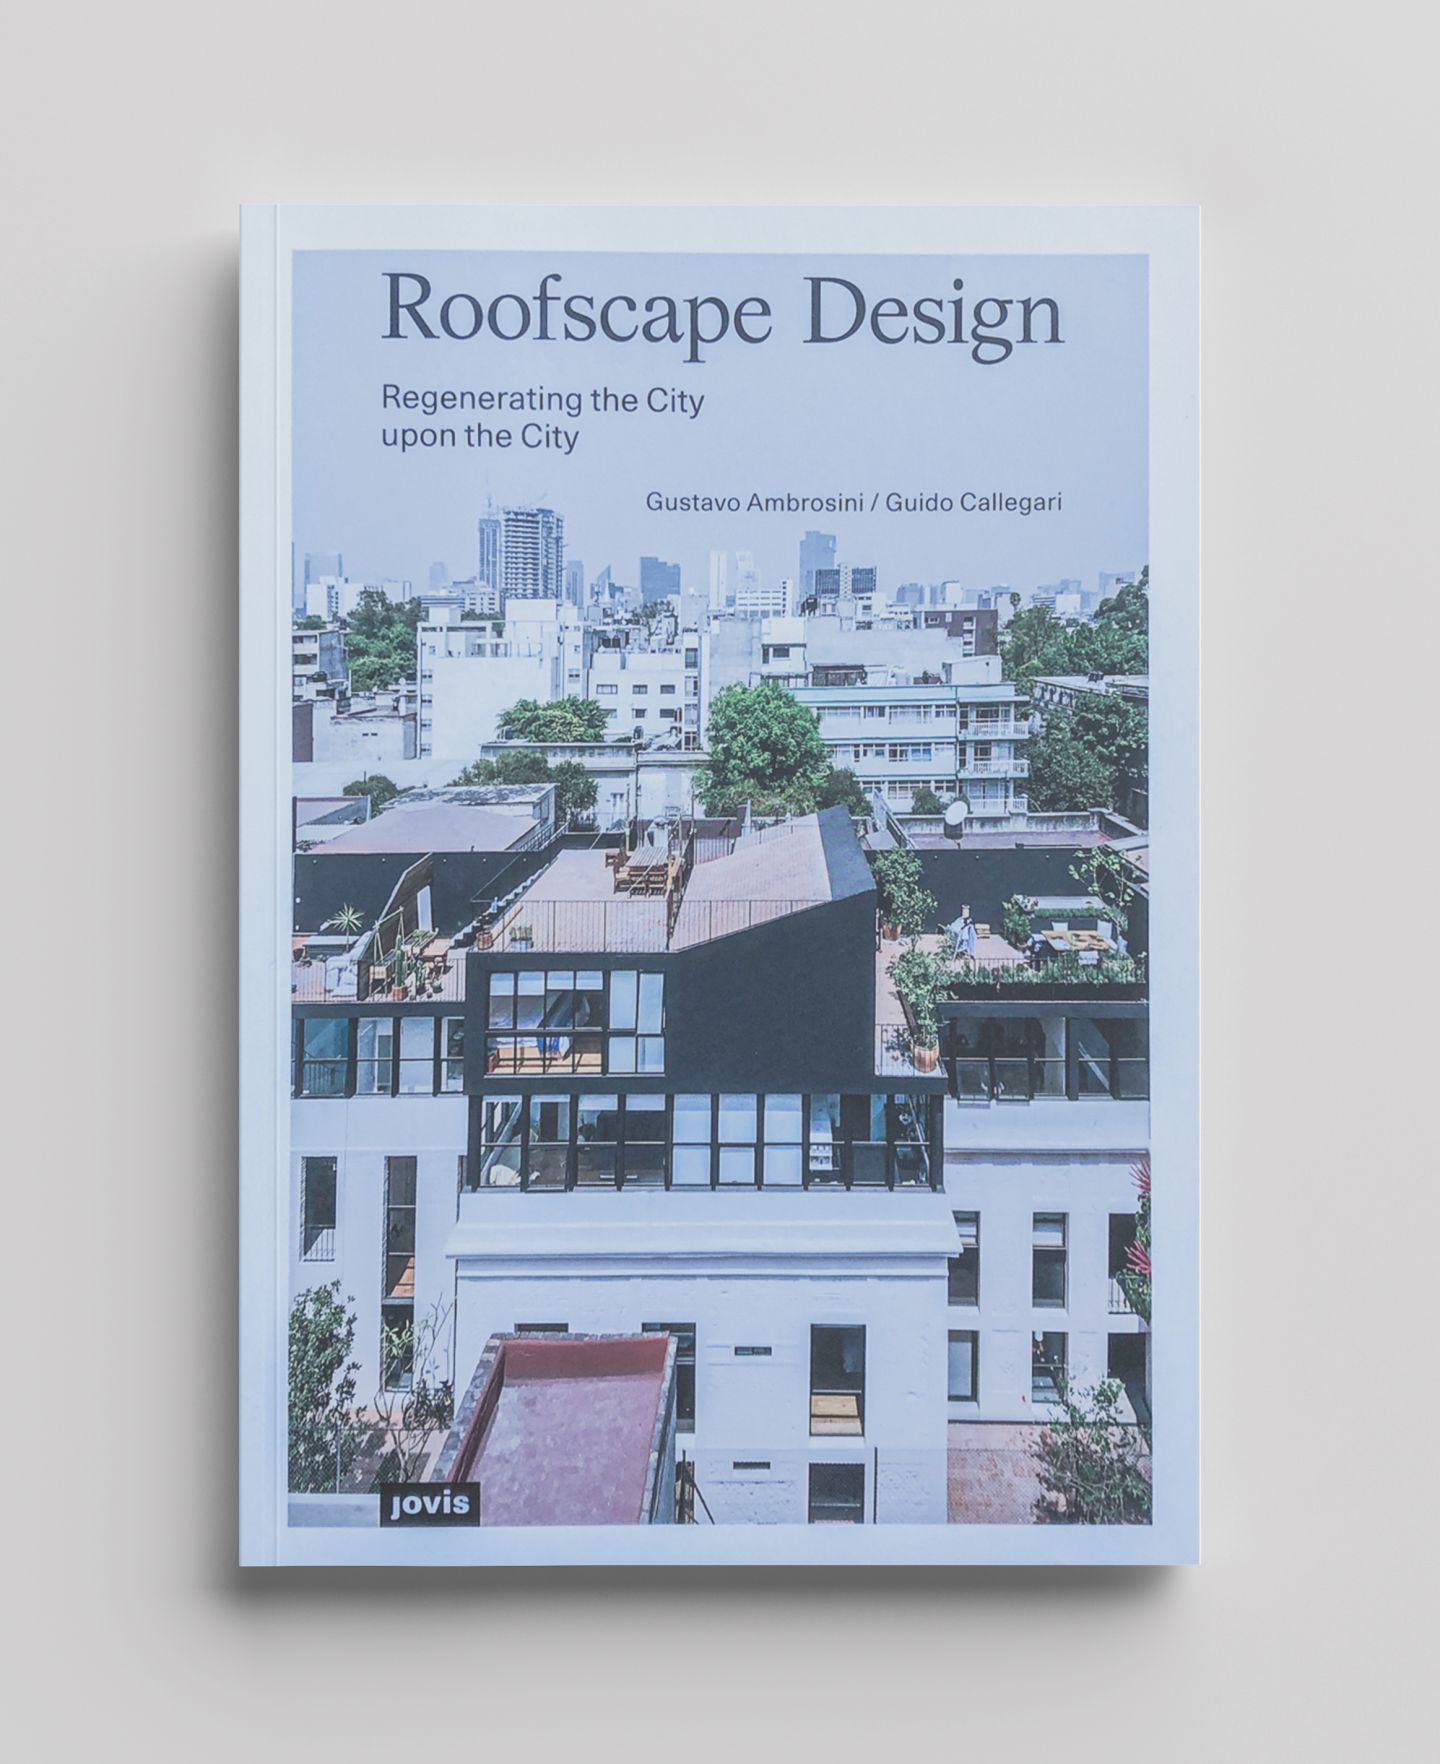 Roofscape Design